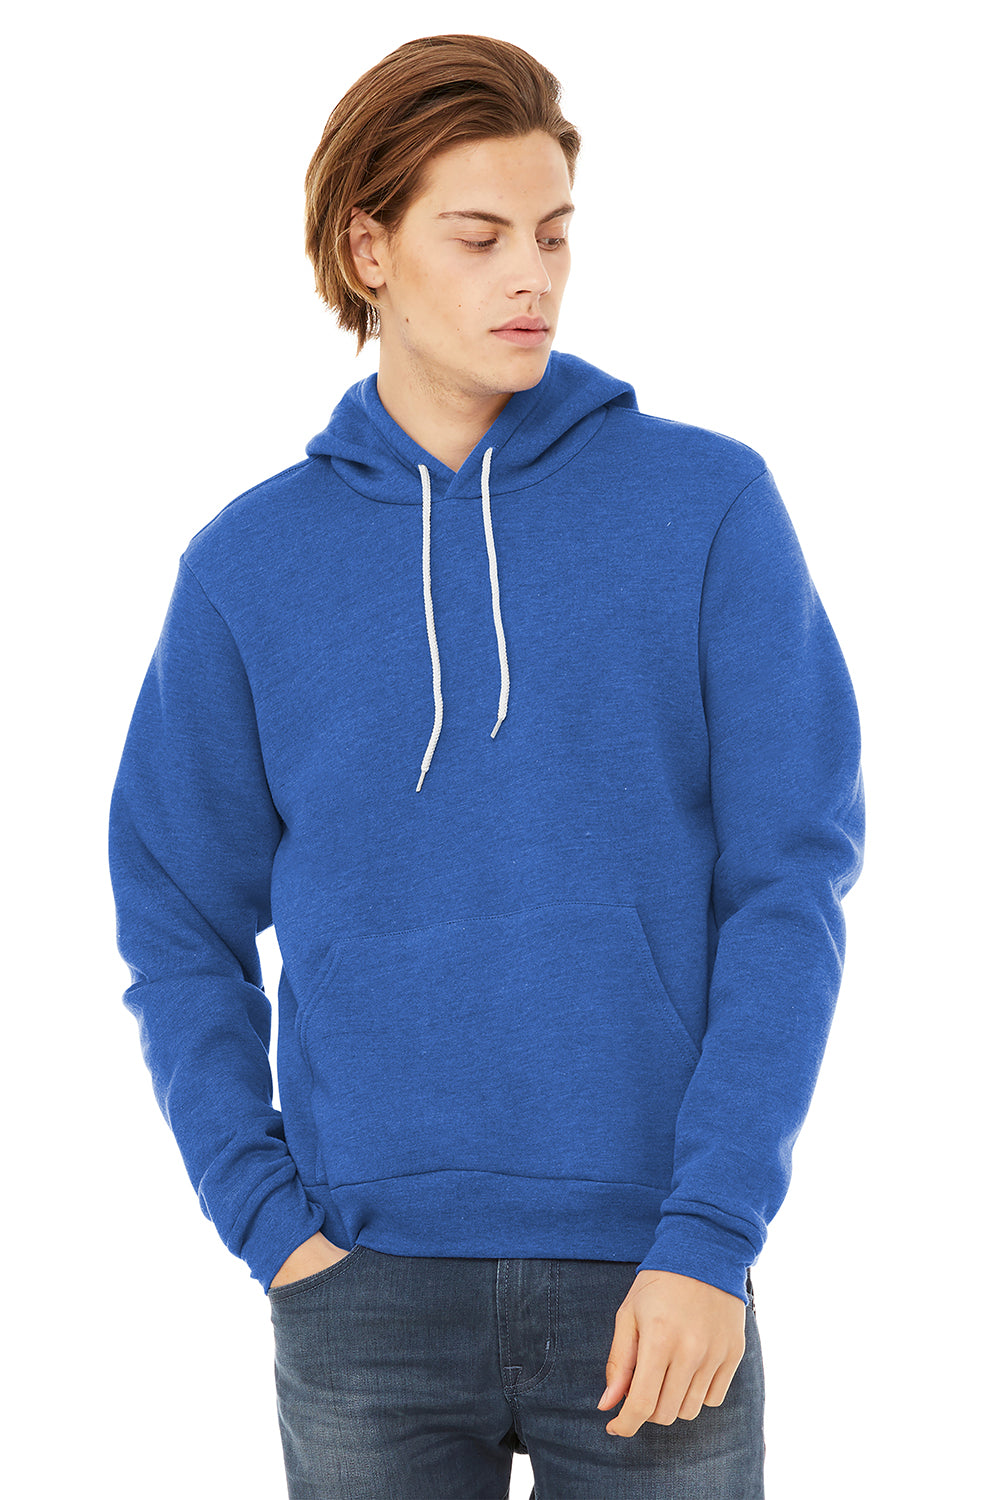 Bella + Canvas BC3719/3719 Mens Sponge Fleece Hooded Sweatshirt Hoodie Heather True Royal Blue Model Front